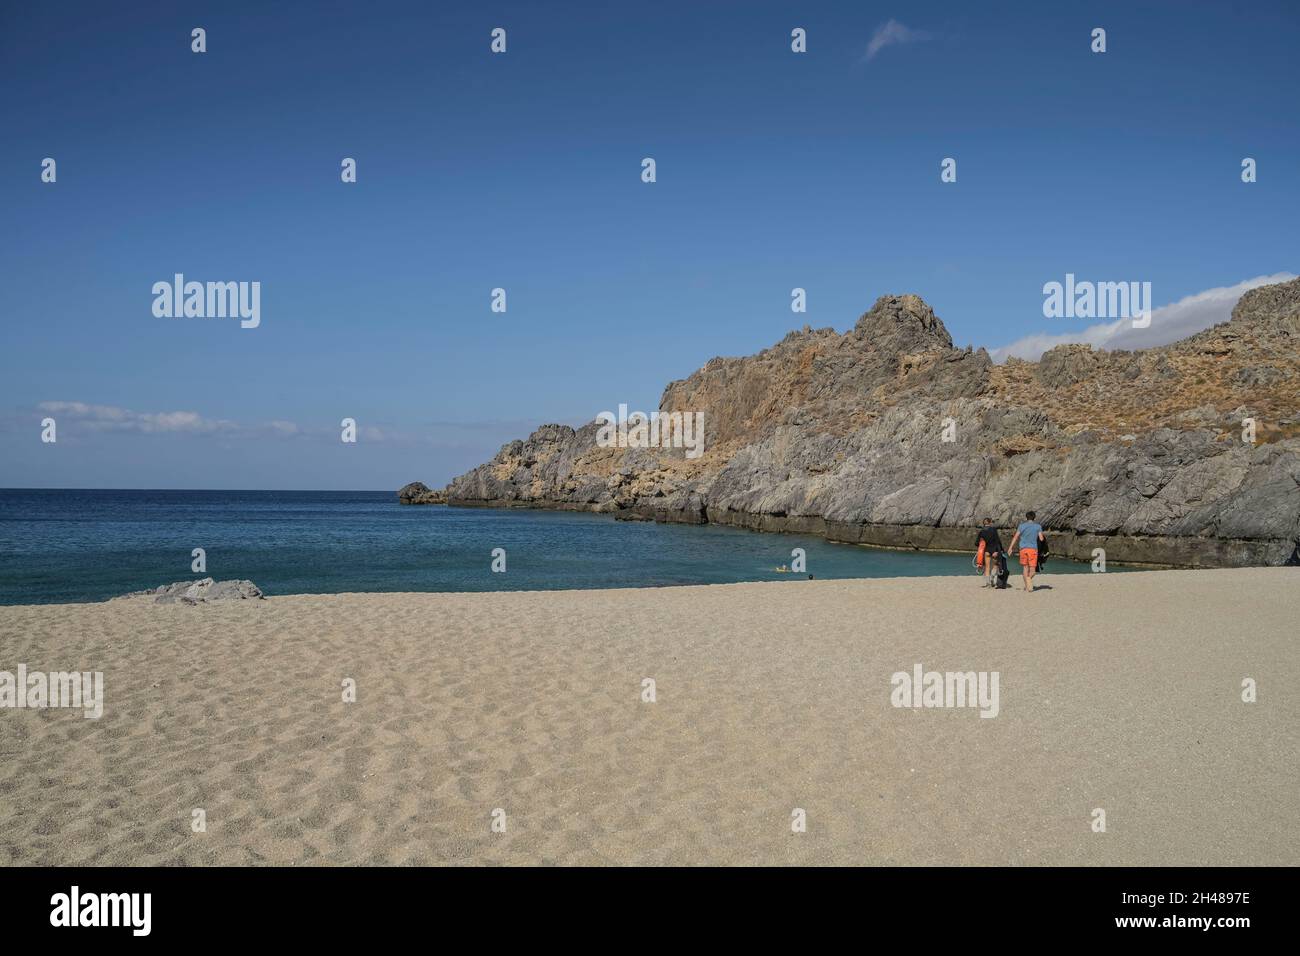 Plage de Sandstrand Skinaria, Südküste, Kreta, Griechenland Banque D'Images